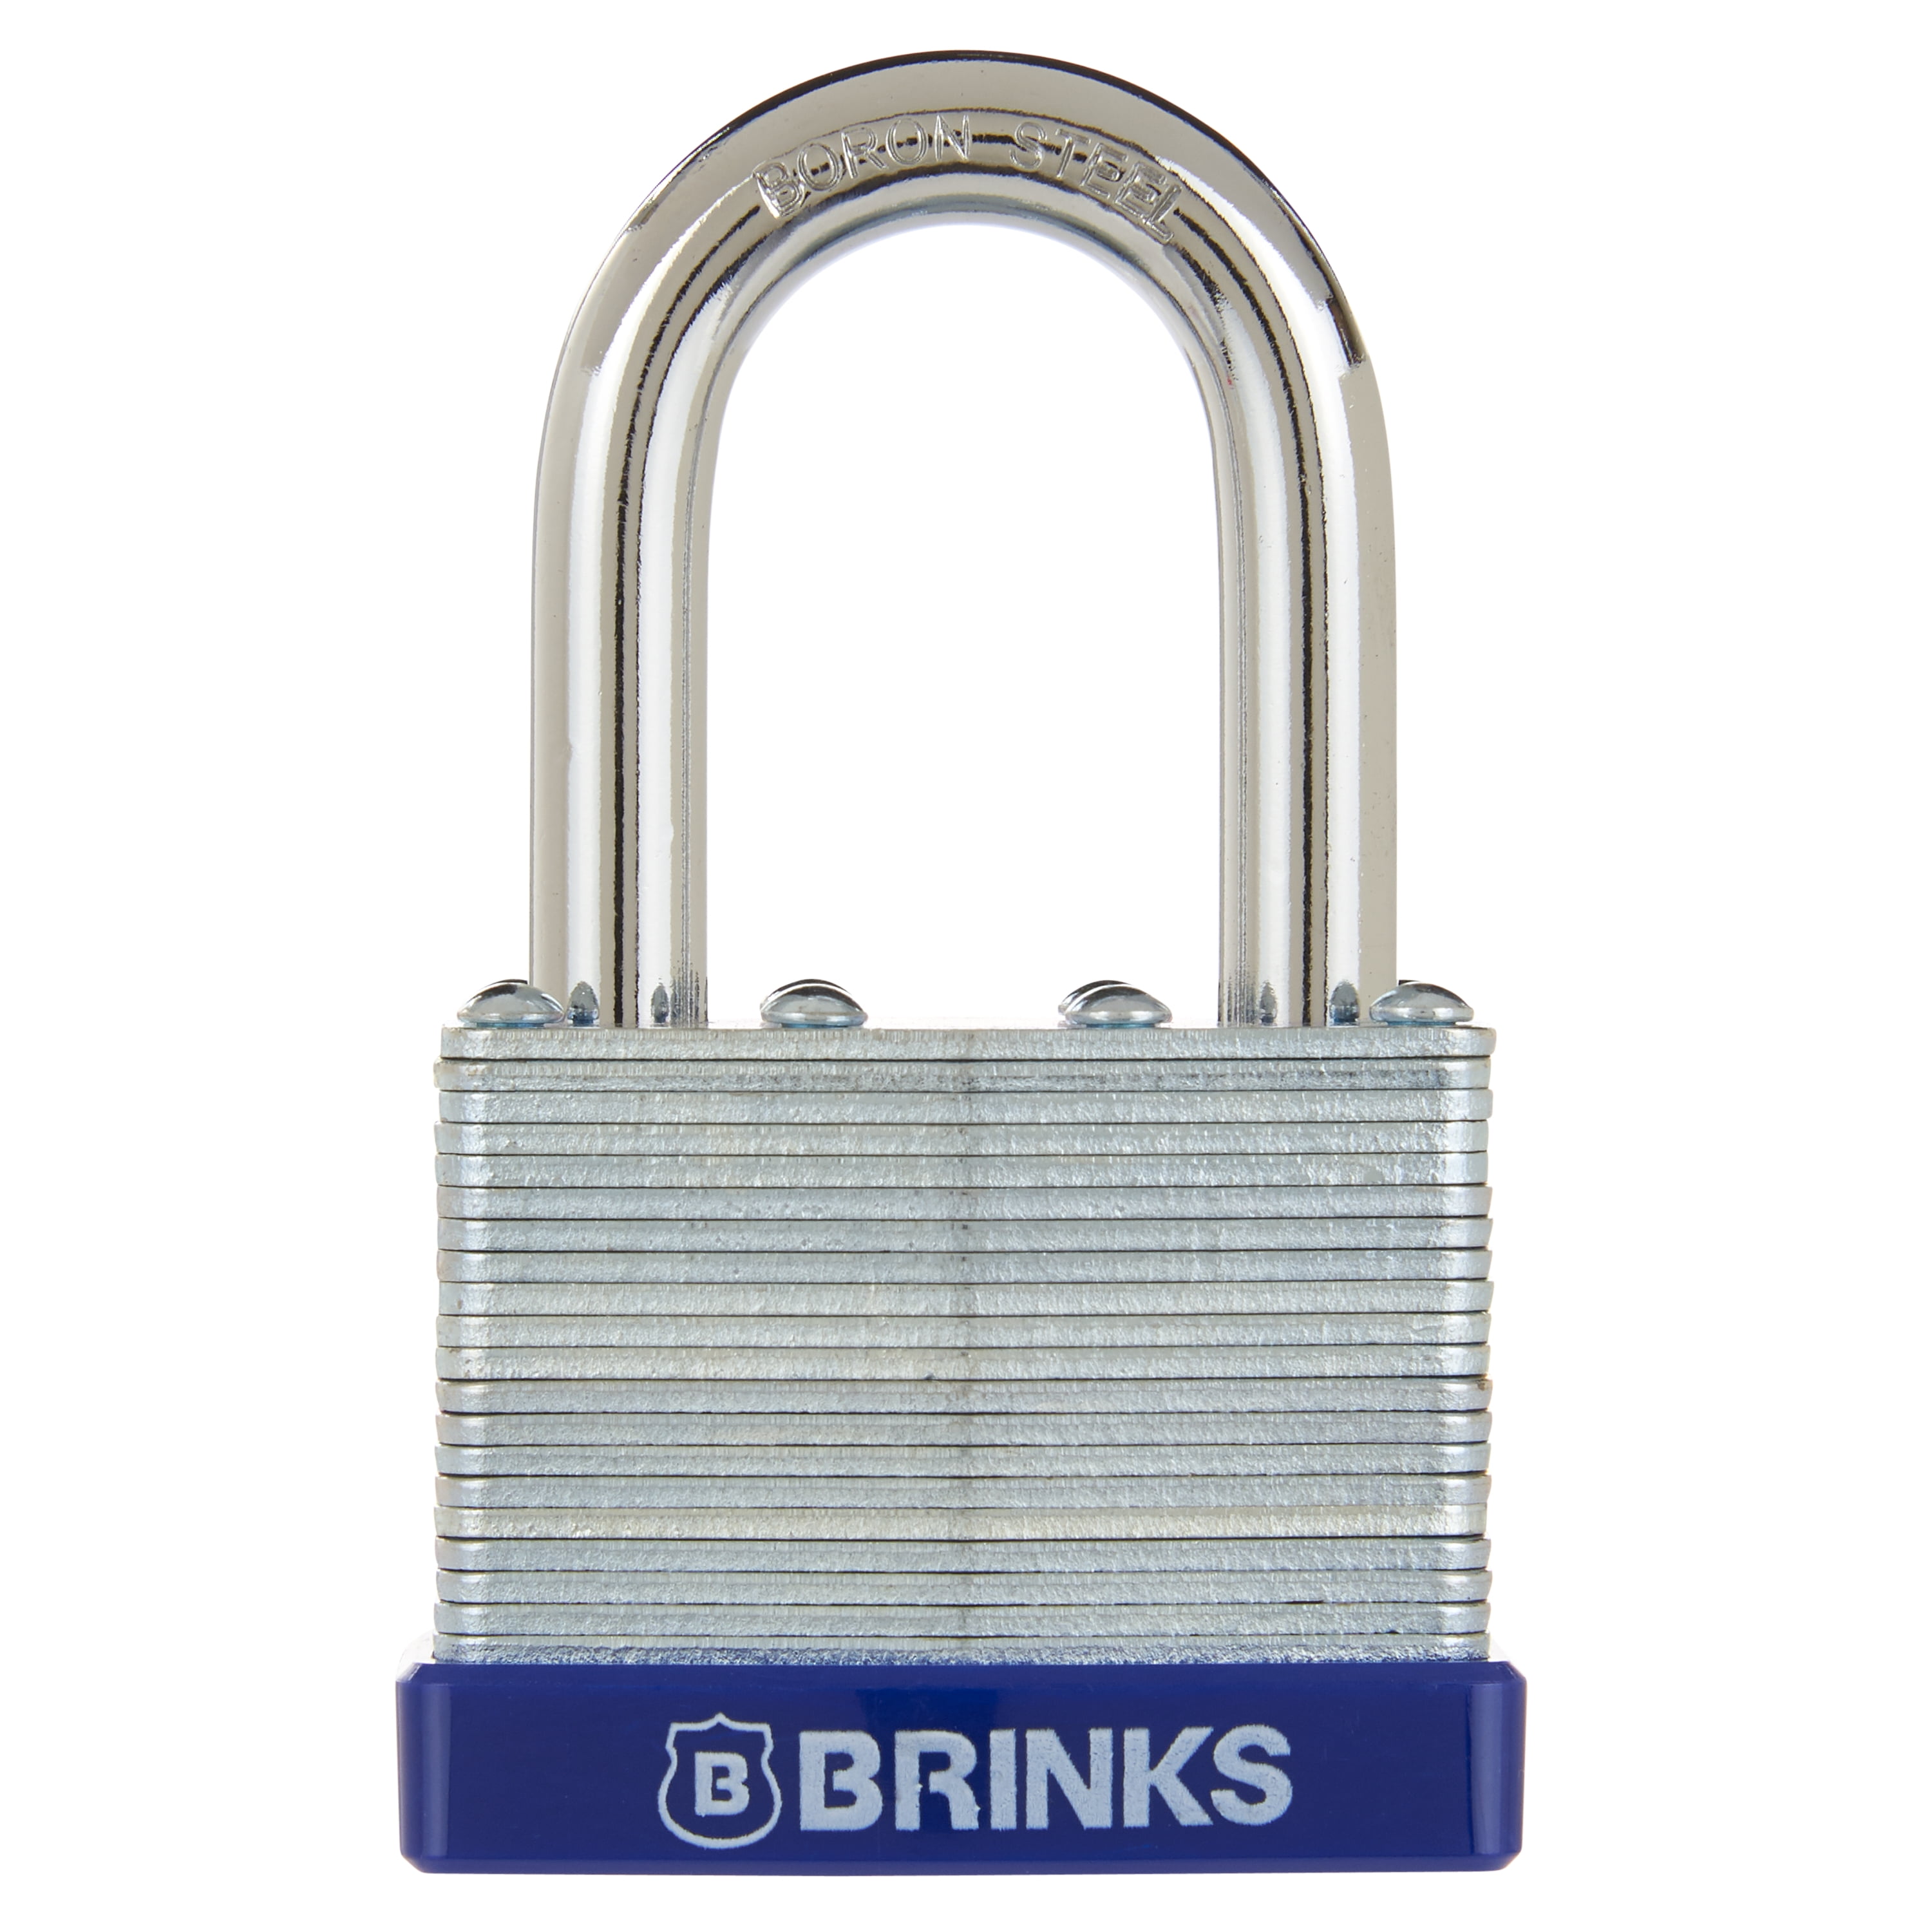 2 Keys Hardened Steel Shackle Lock Gate/Shed 50mm LAMINATED SECURITY PADLOCK 